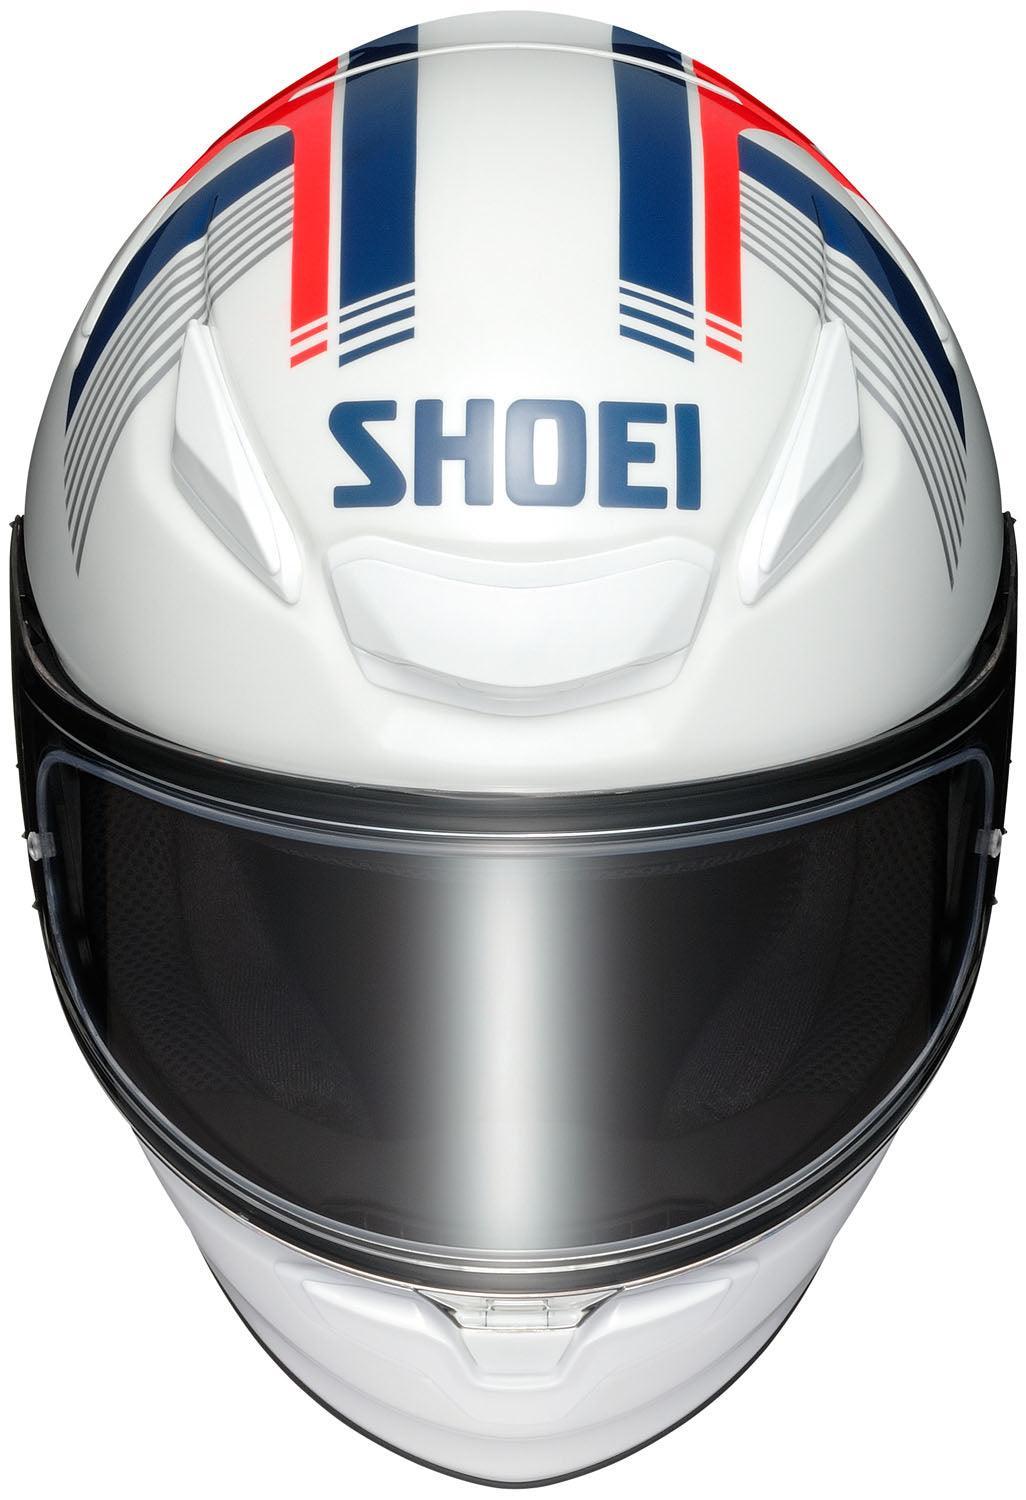 Shoei RF-1400 MM93 Retro Helmet - TC-10 White/Red/Blue - Size 2XL - OPEN BOX - Motor Psycho Sport